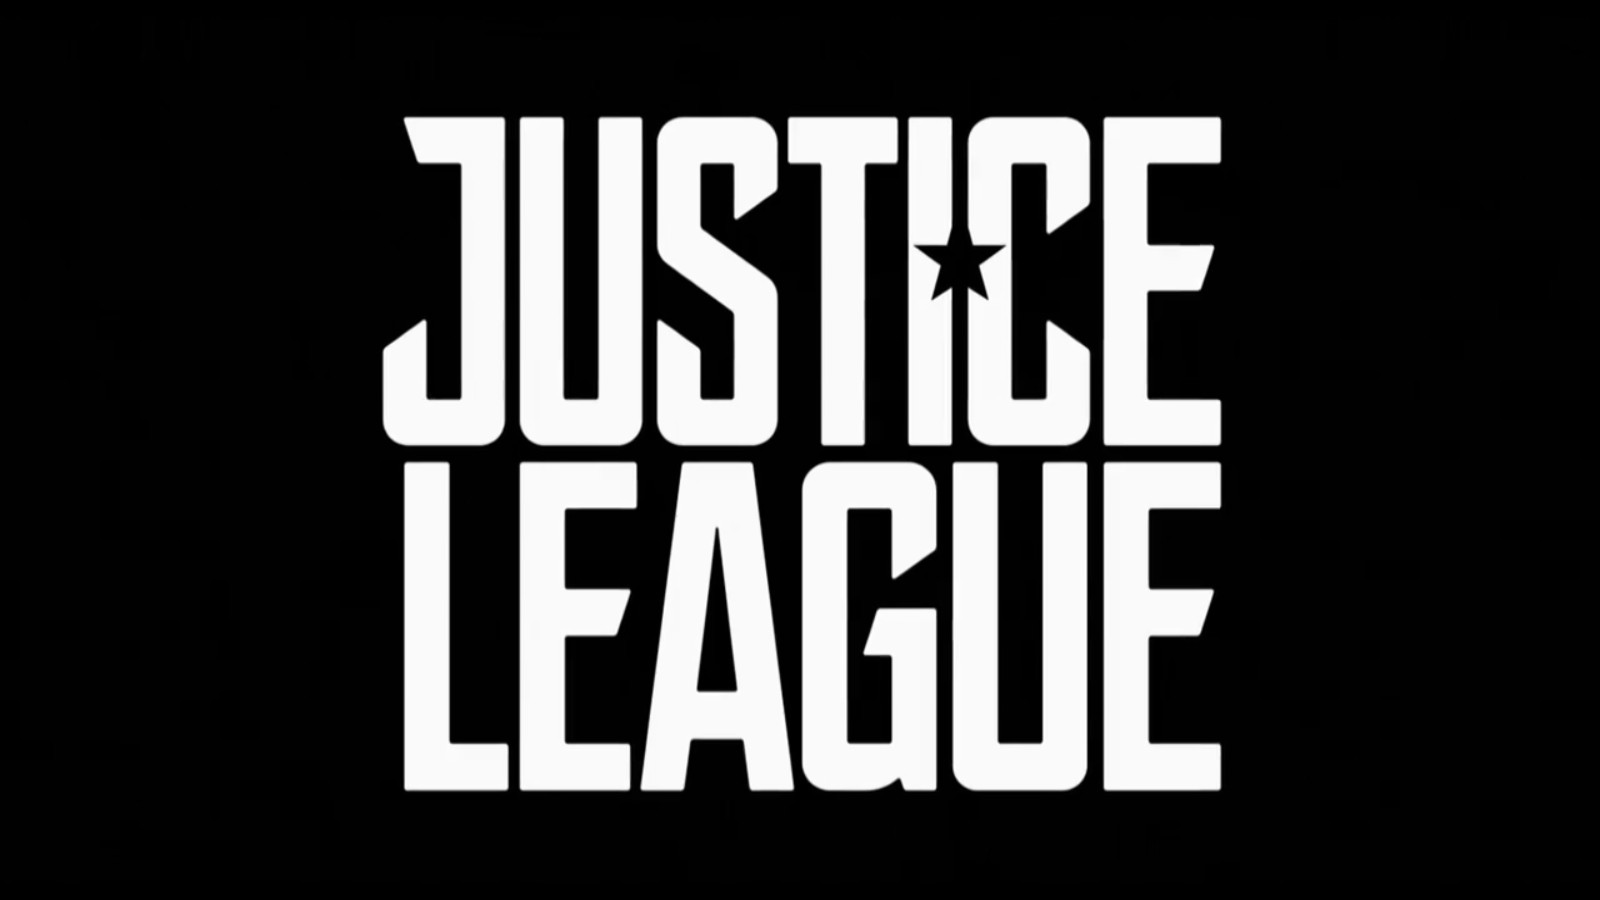 Justice League, Movies, Batman, Typography, Black background Wallpaper